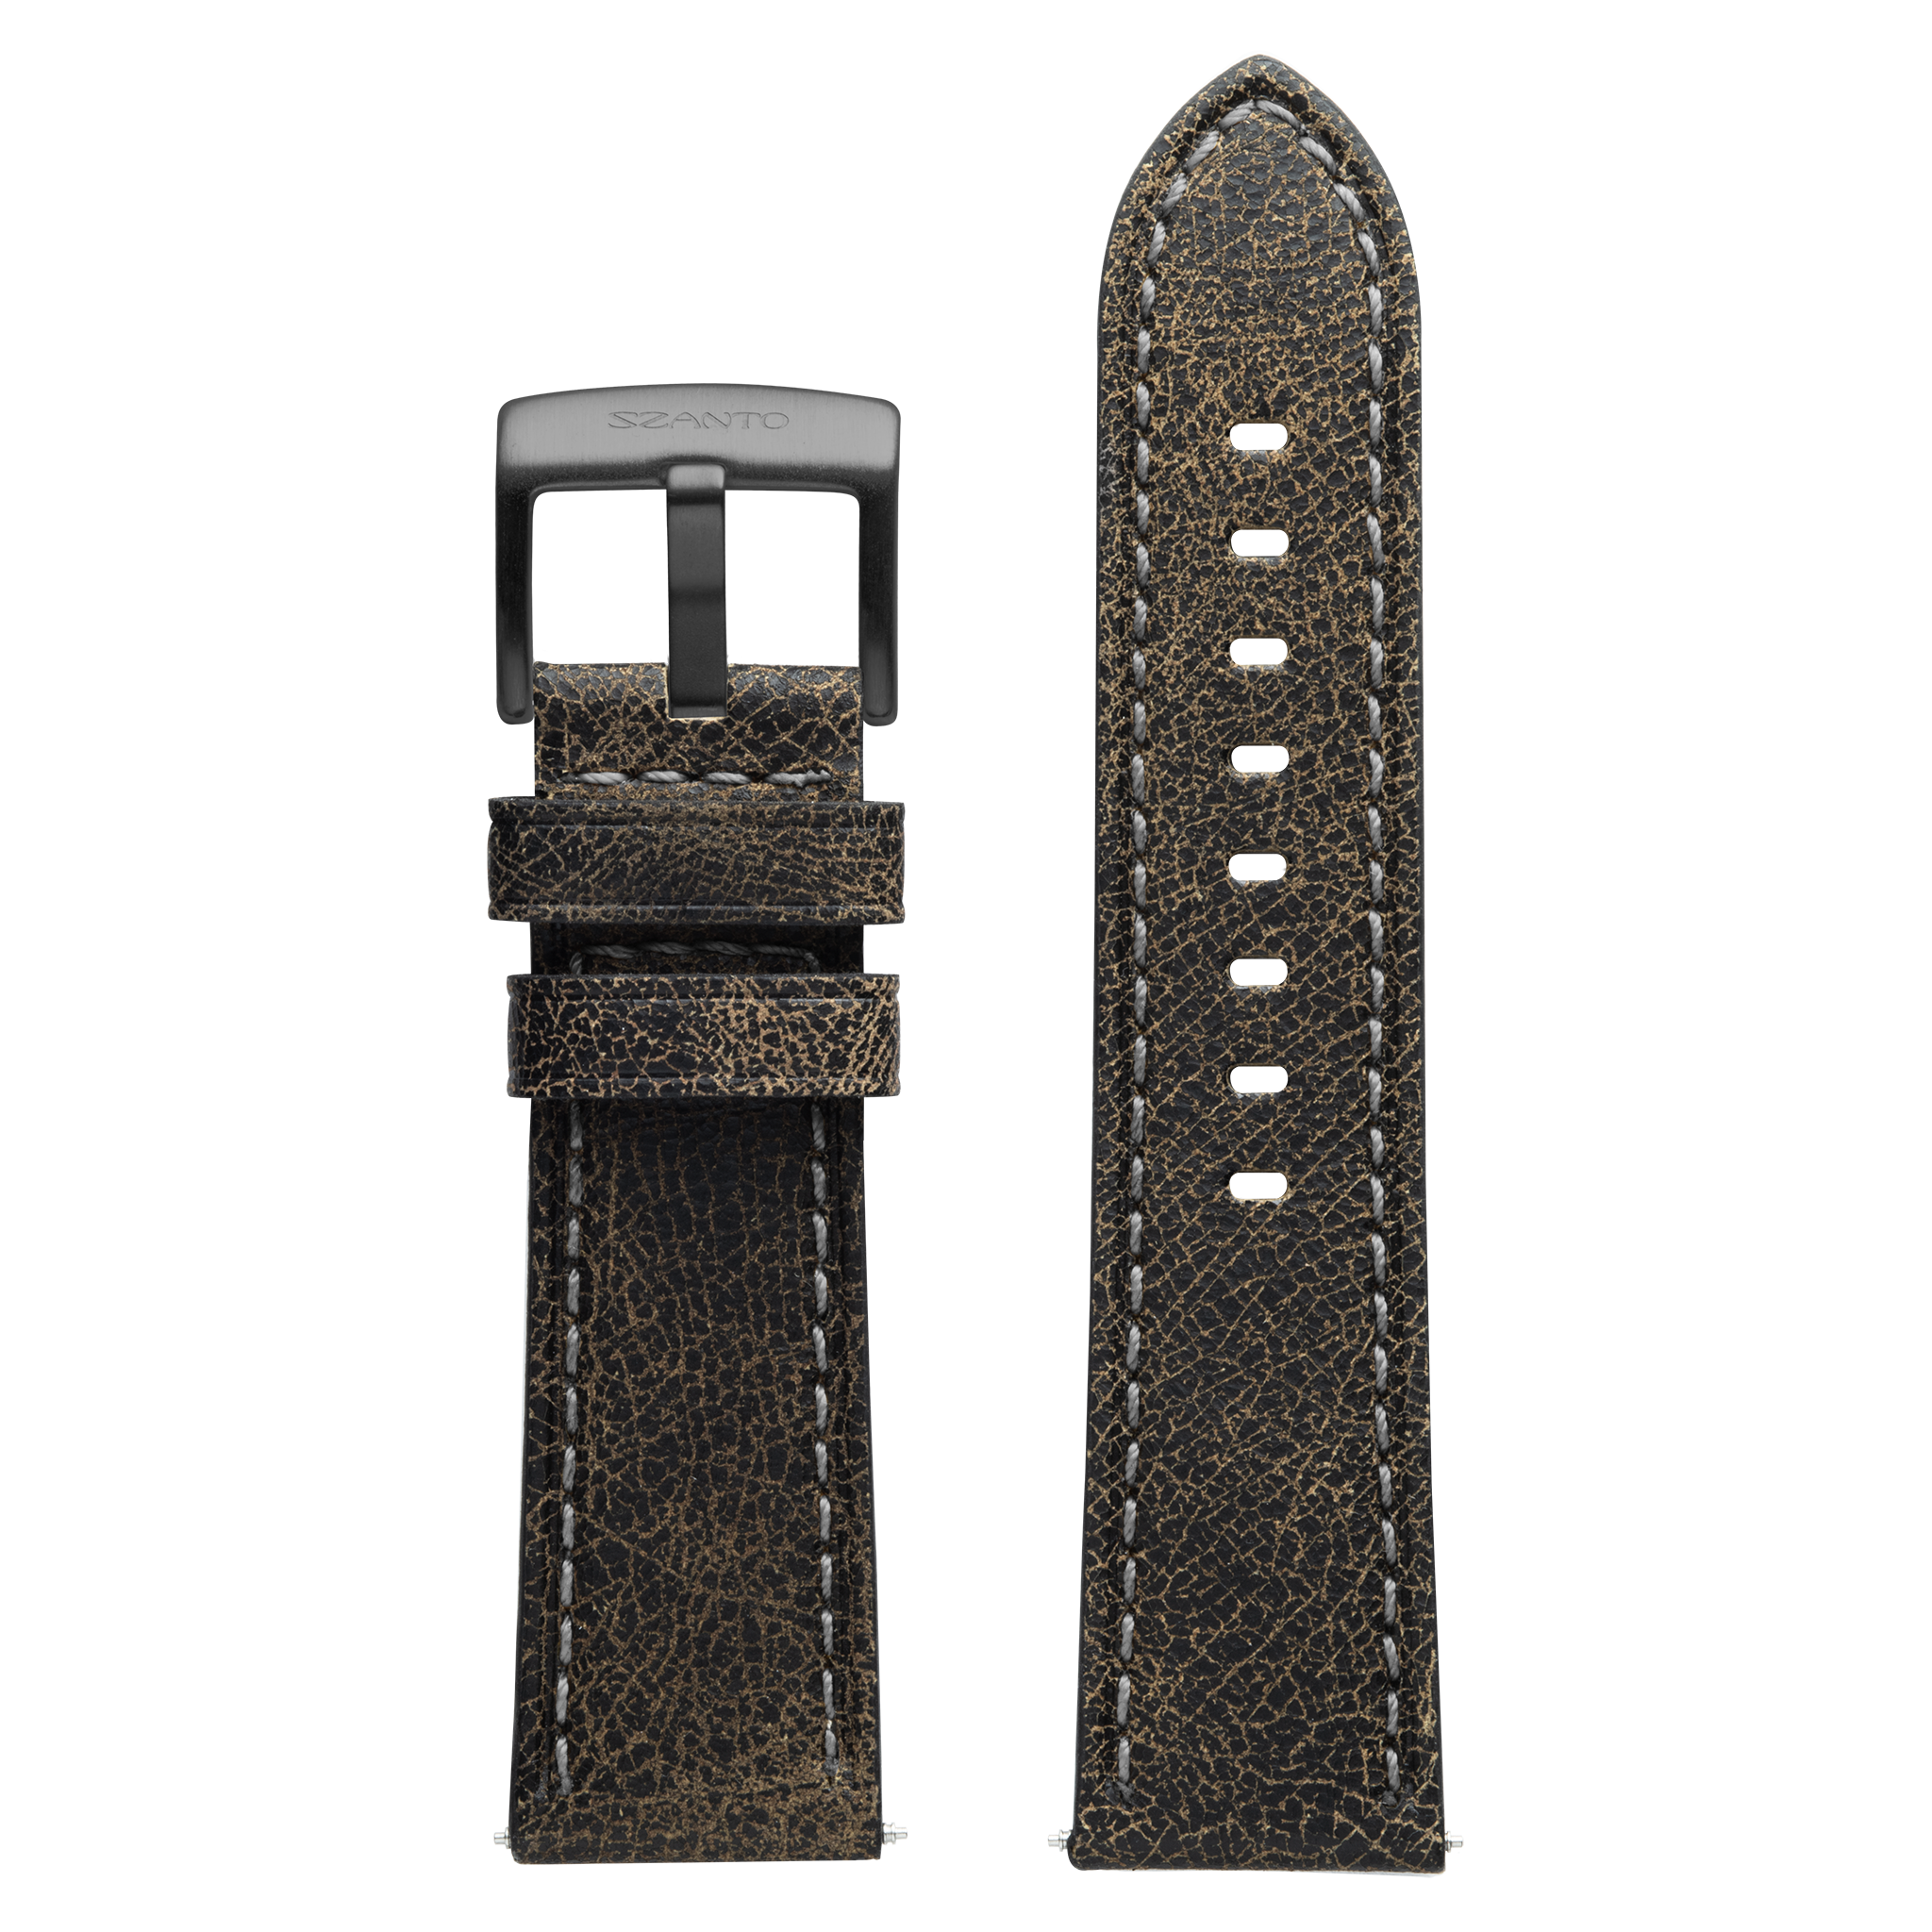 Szanto 24mm 2600 Series Black Leather Strap with Gray Stitch/Gun Gray Buckle